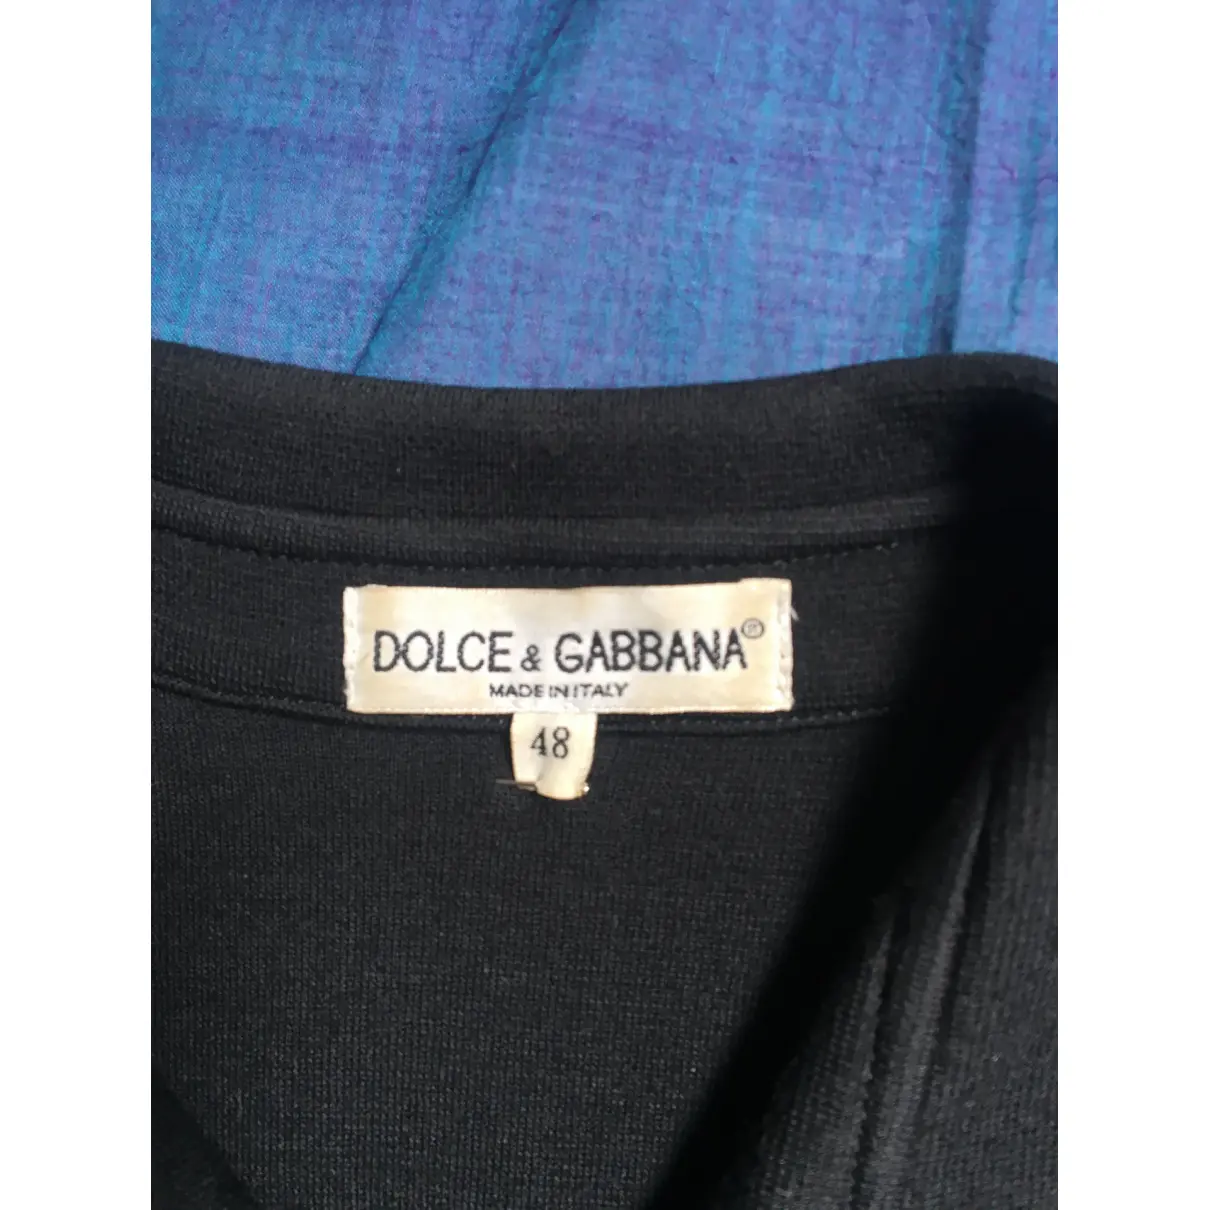 Luxury Dolce & Gabbana Shirts Men - Vintage